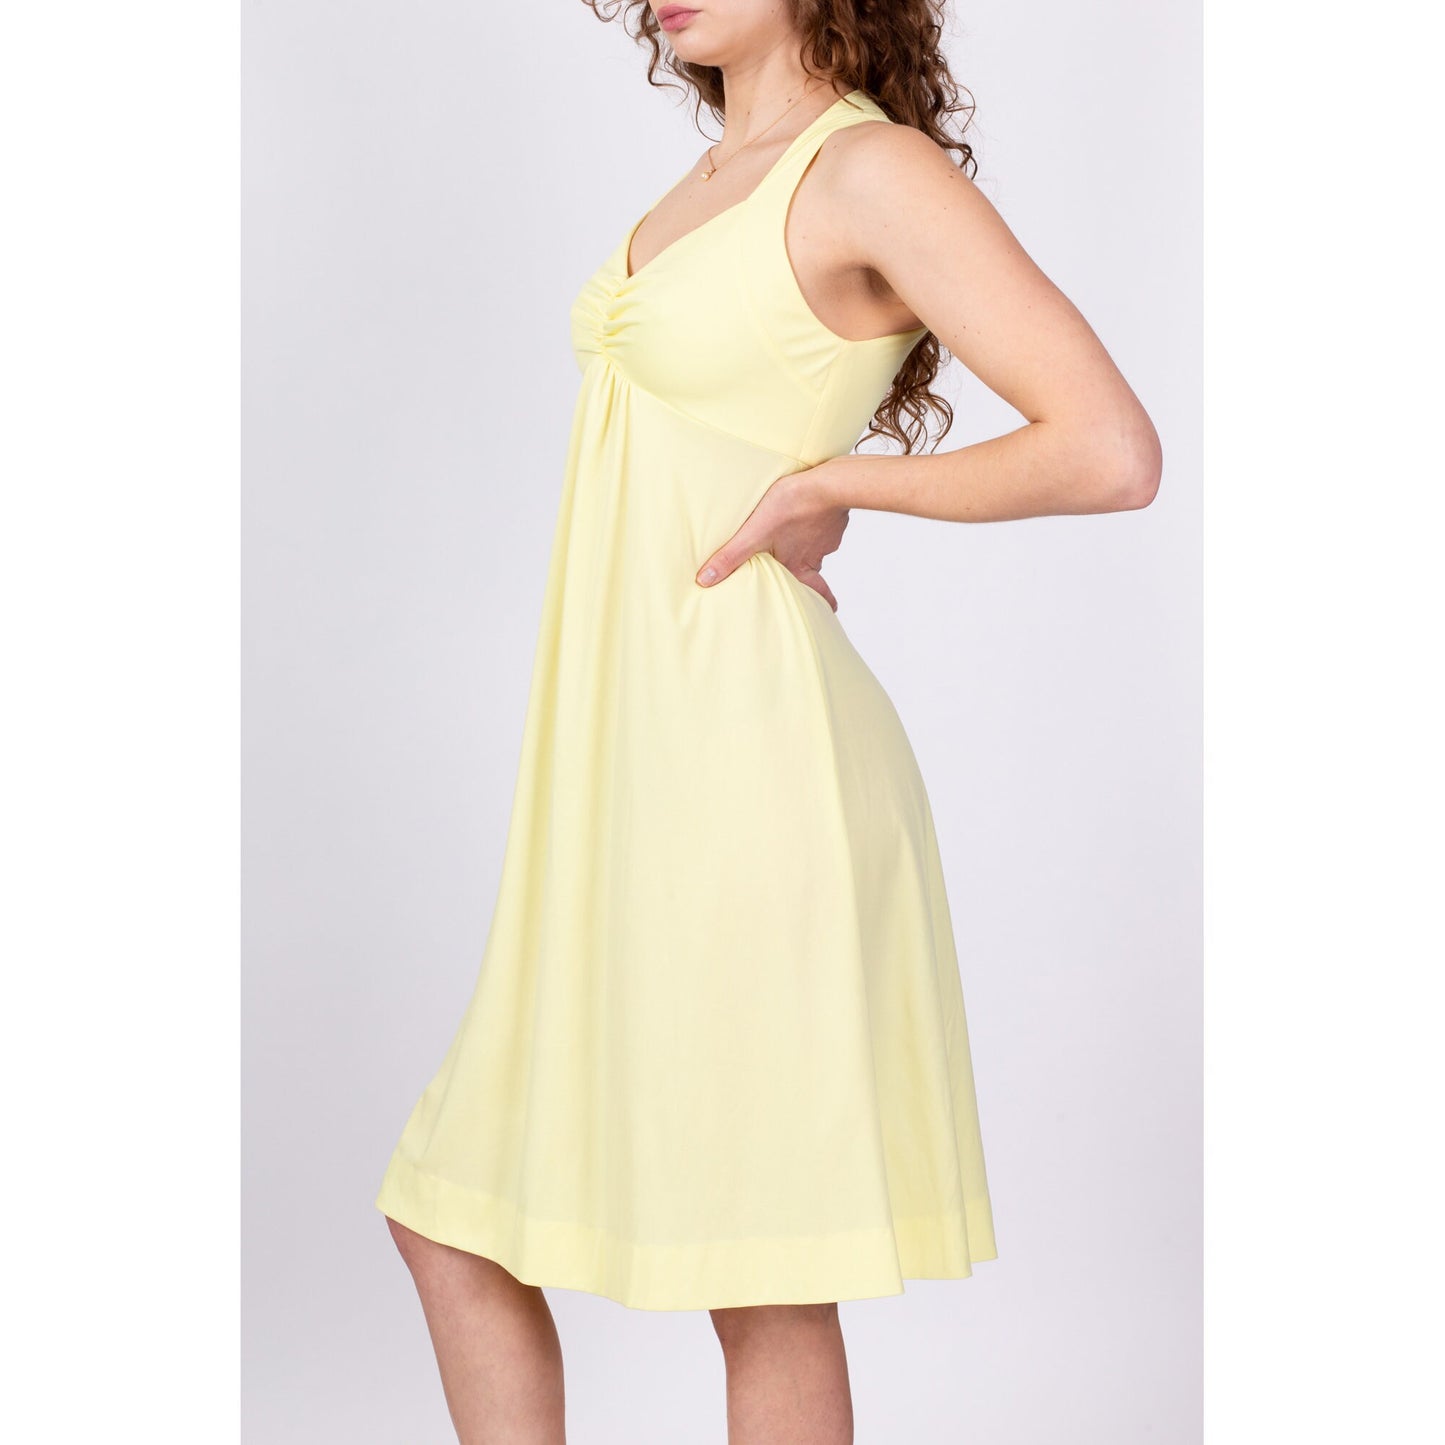 70s Yellow Halter Disco Dress - Small to Medium